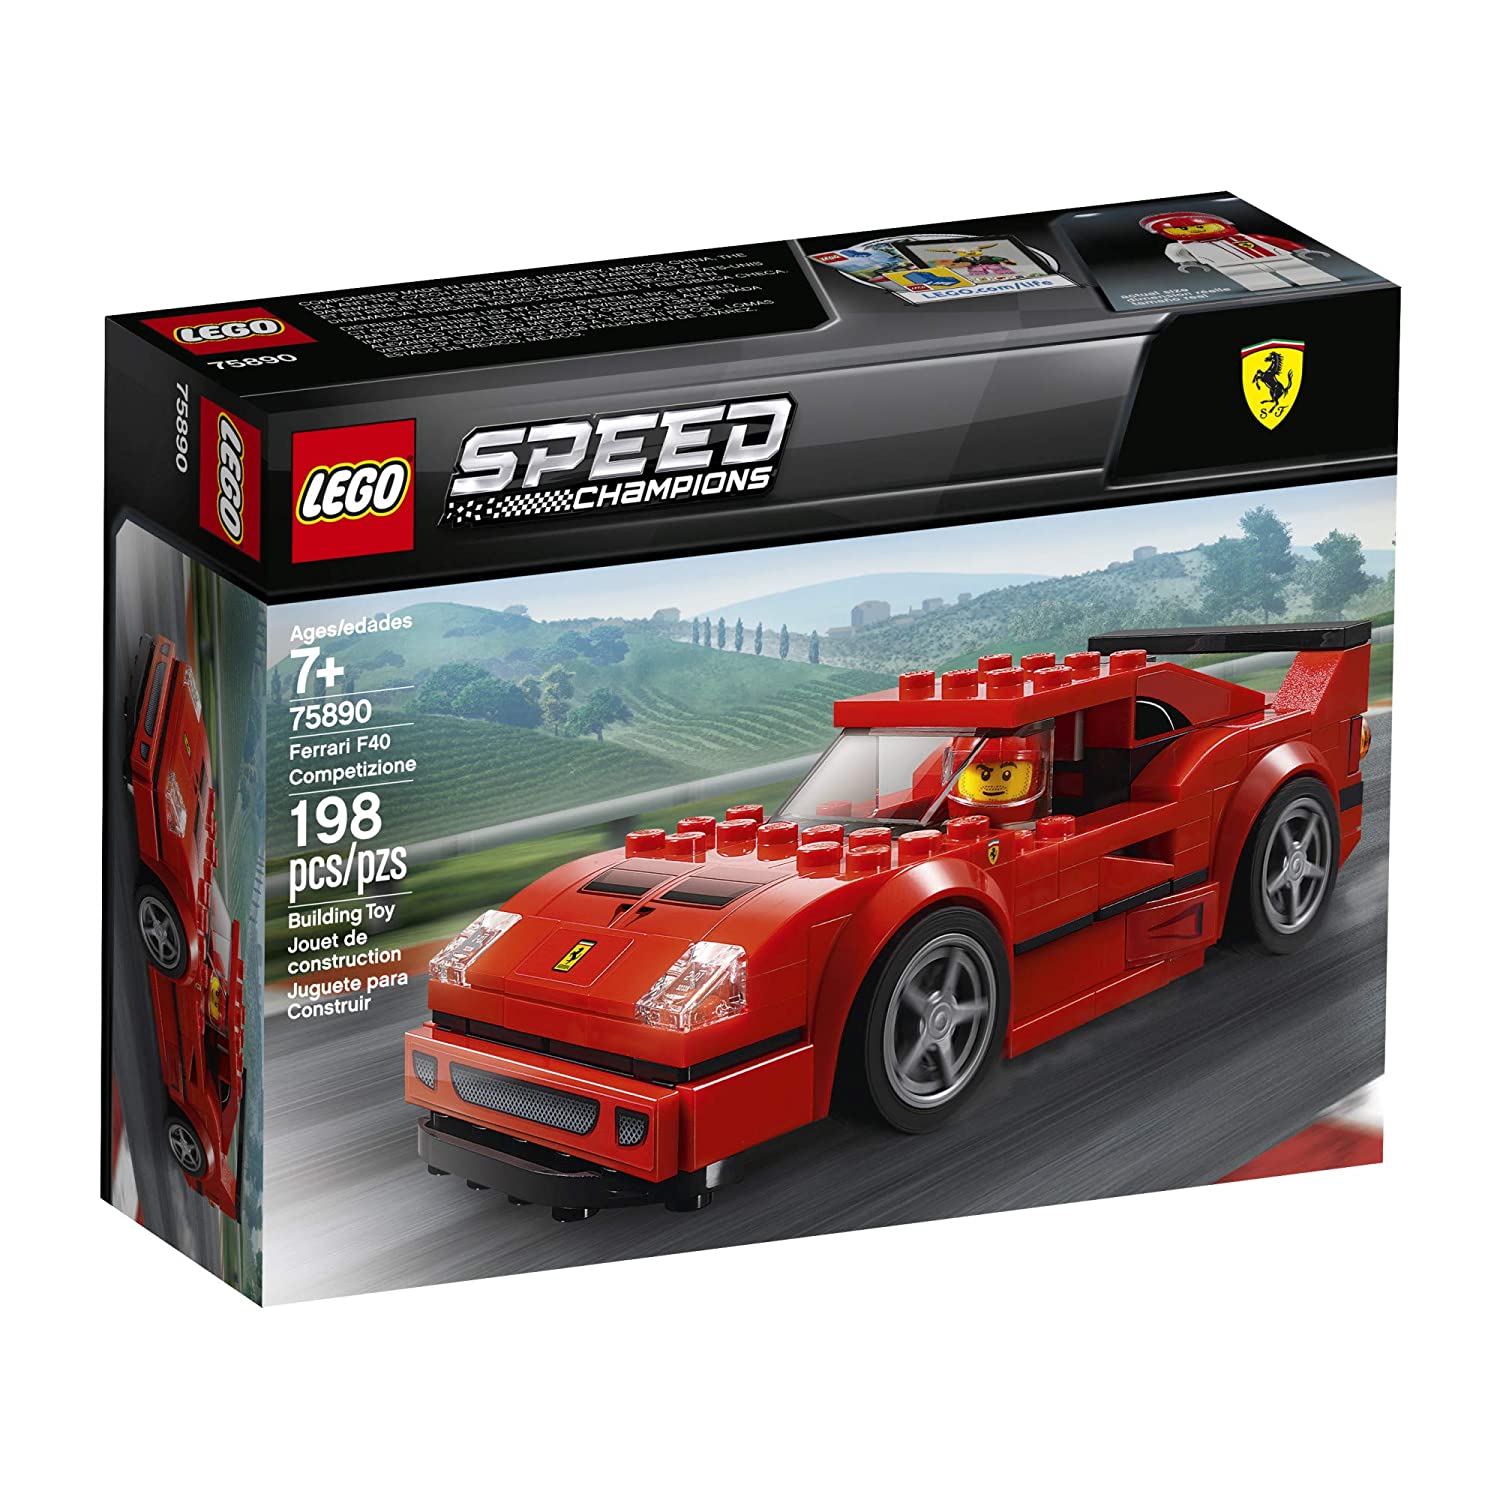 Top 9 Best LEGO Ferrari Sets Reviews in 2022 2